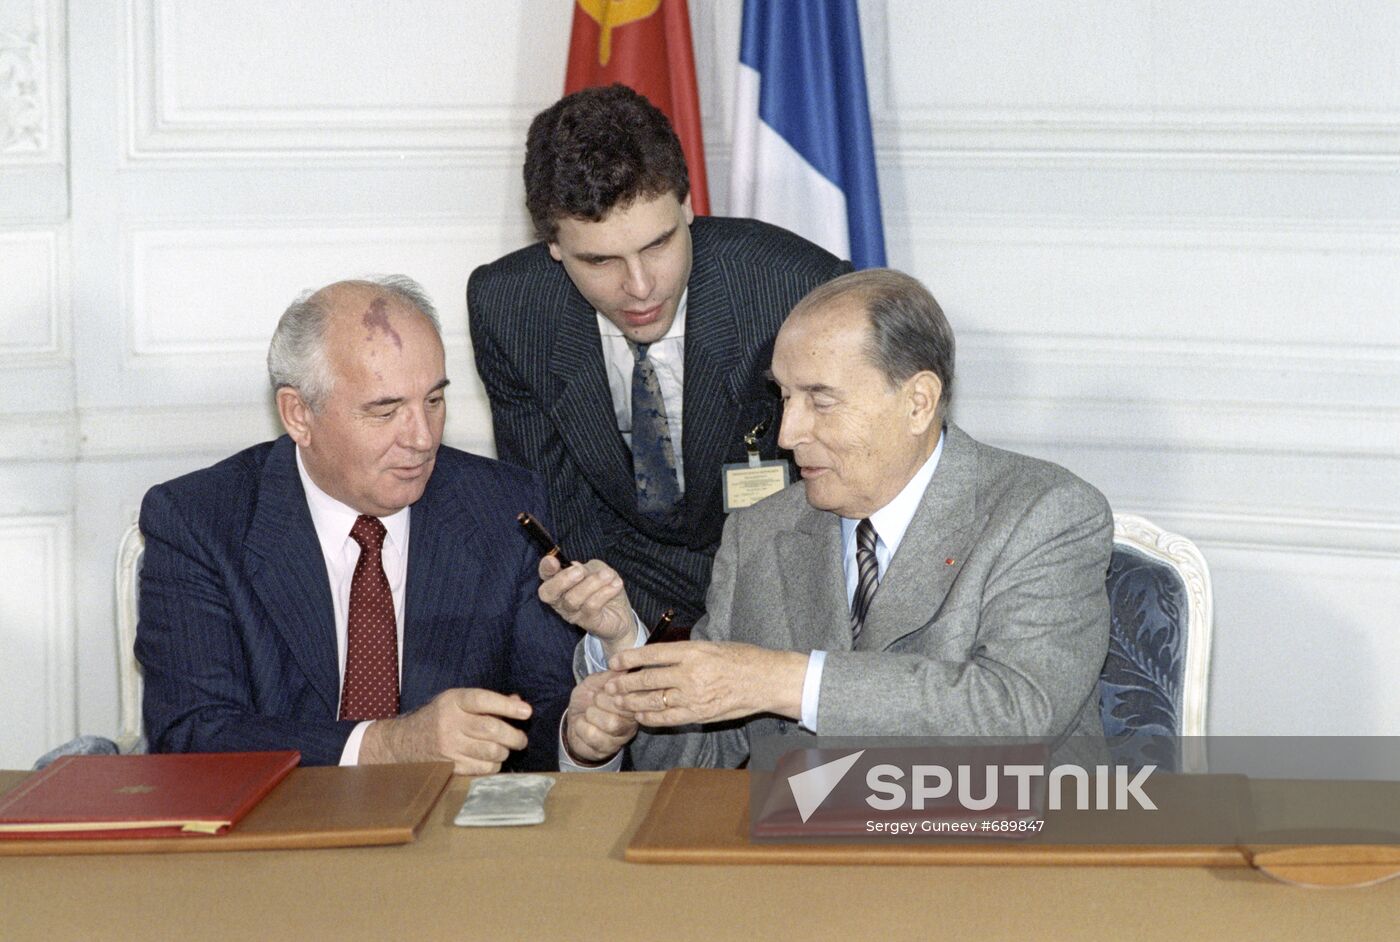 Mikhail Gorbachev and François Mitterrand